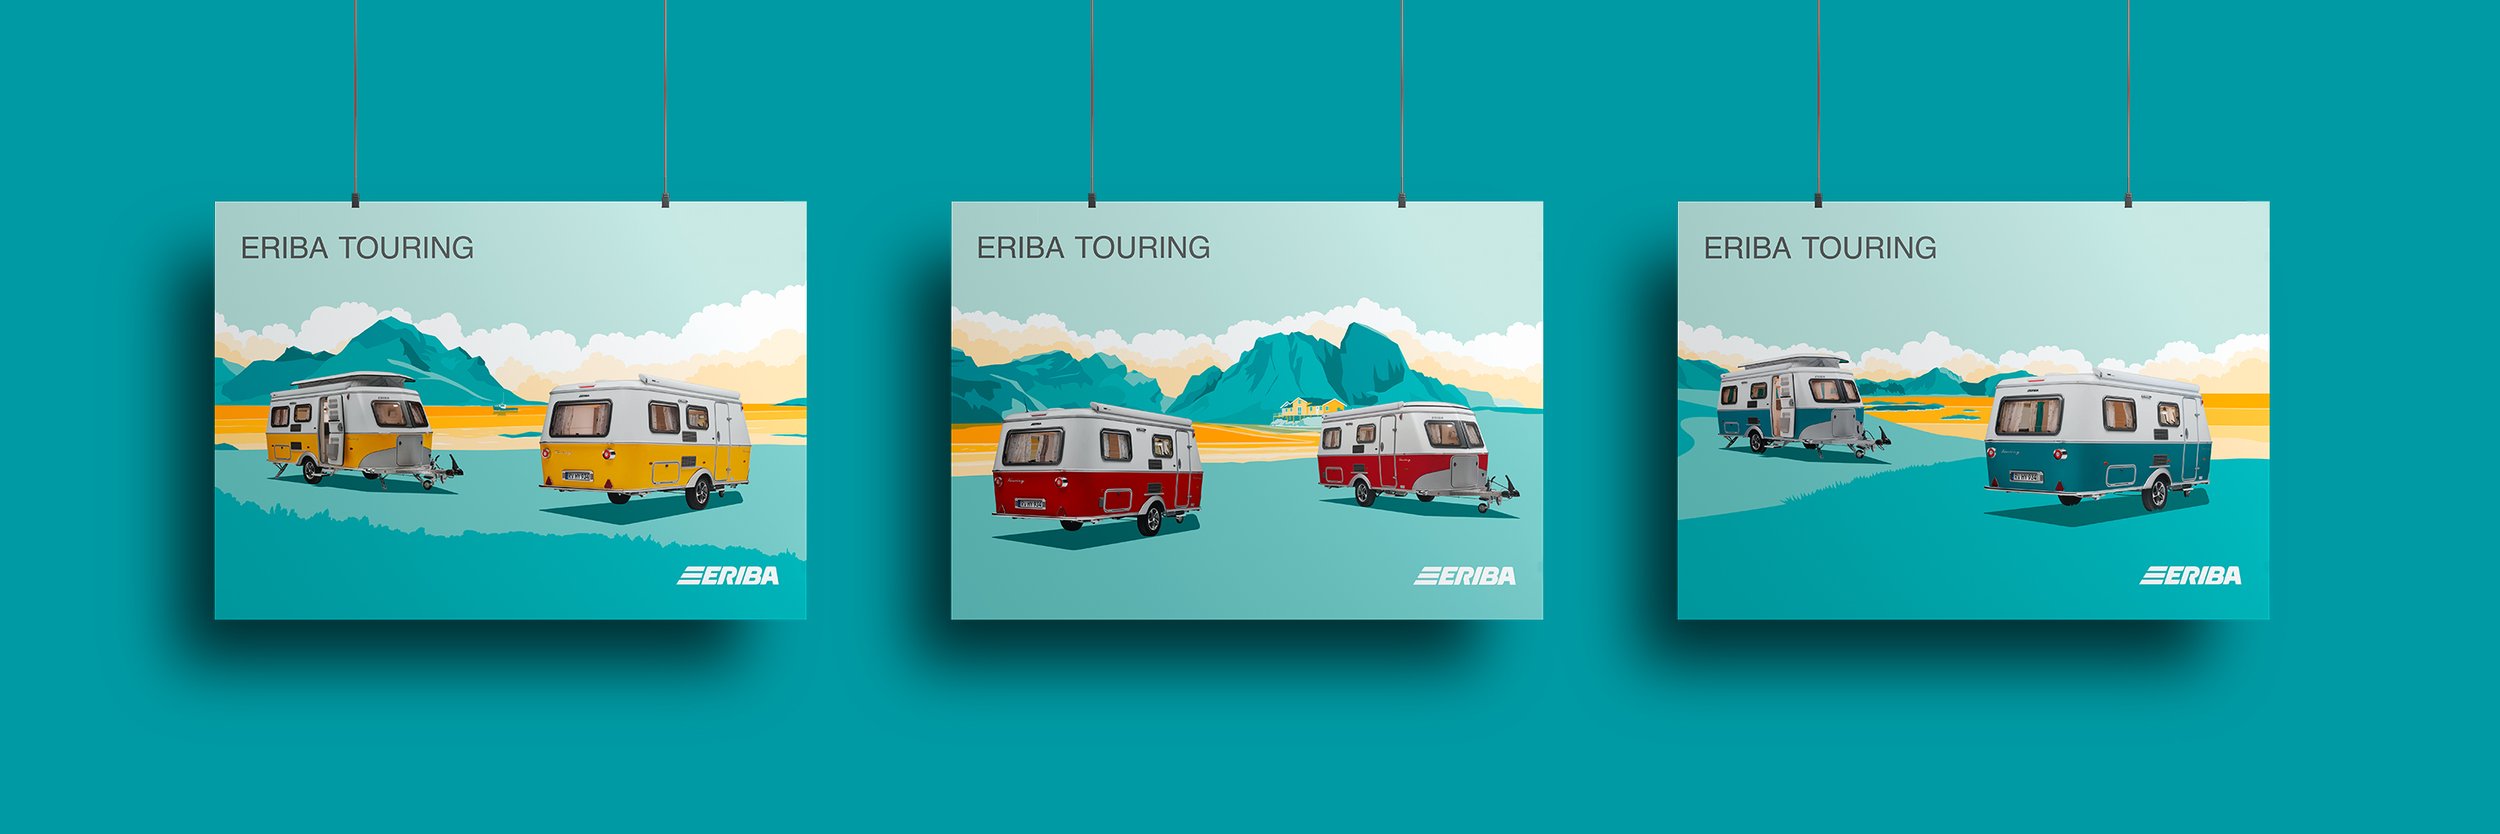 Eriba_Touring_Colours_Set Kopie.jpg